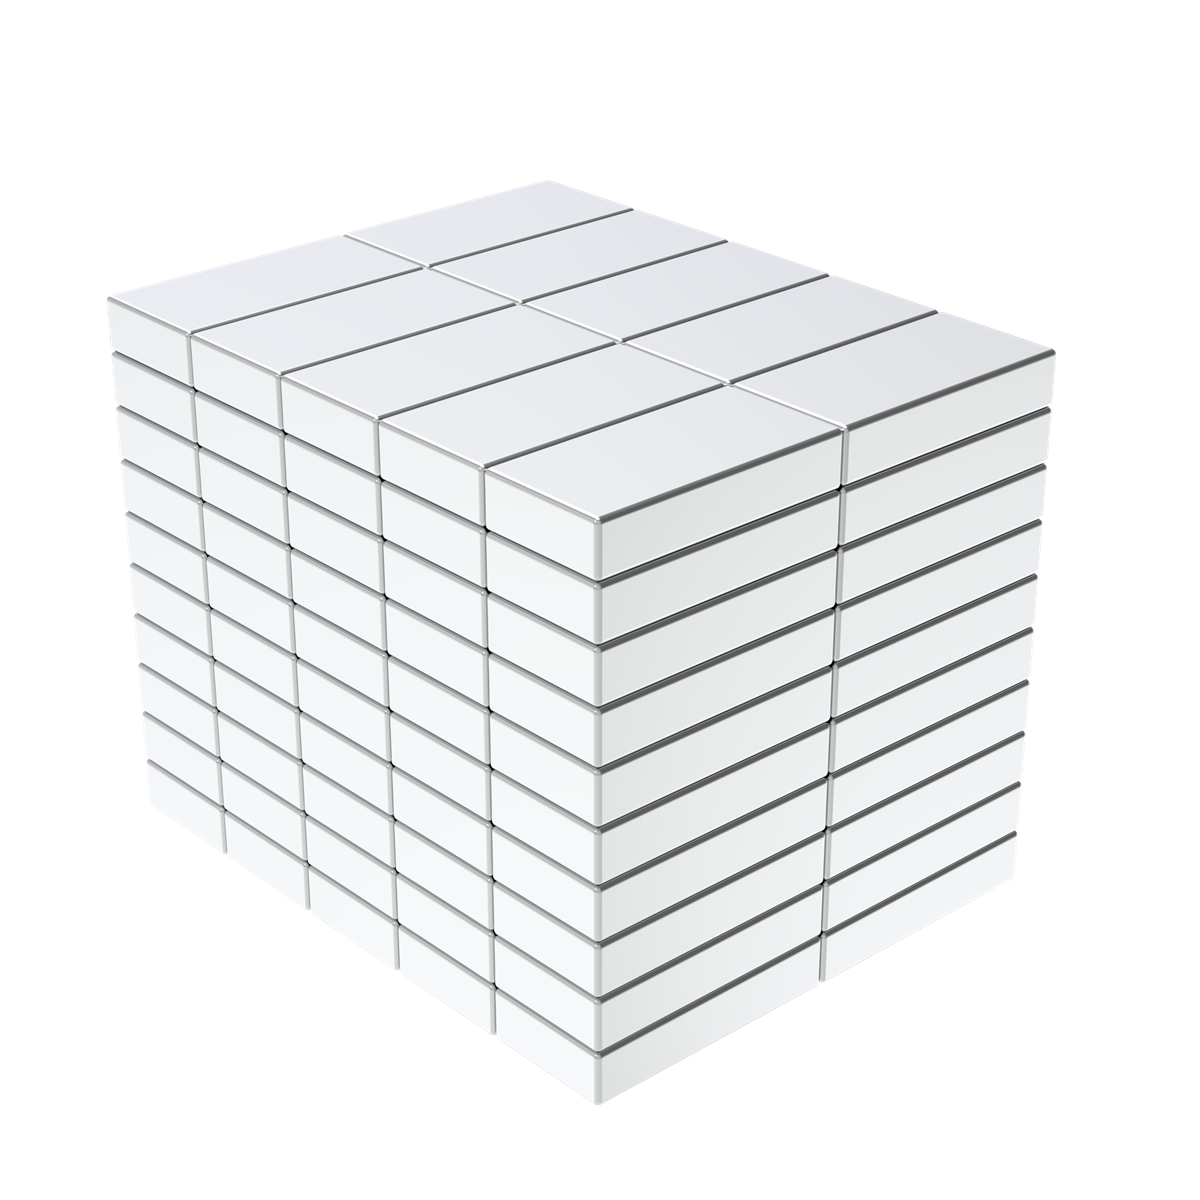 10 x 5 x 2 mm Neodymium Rare Earth Block Magnets N52 with Ni Coating (100 Pack)